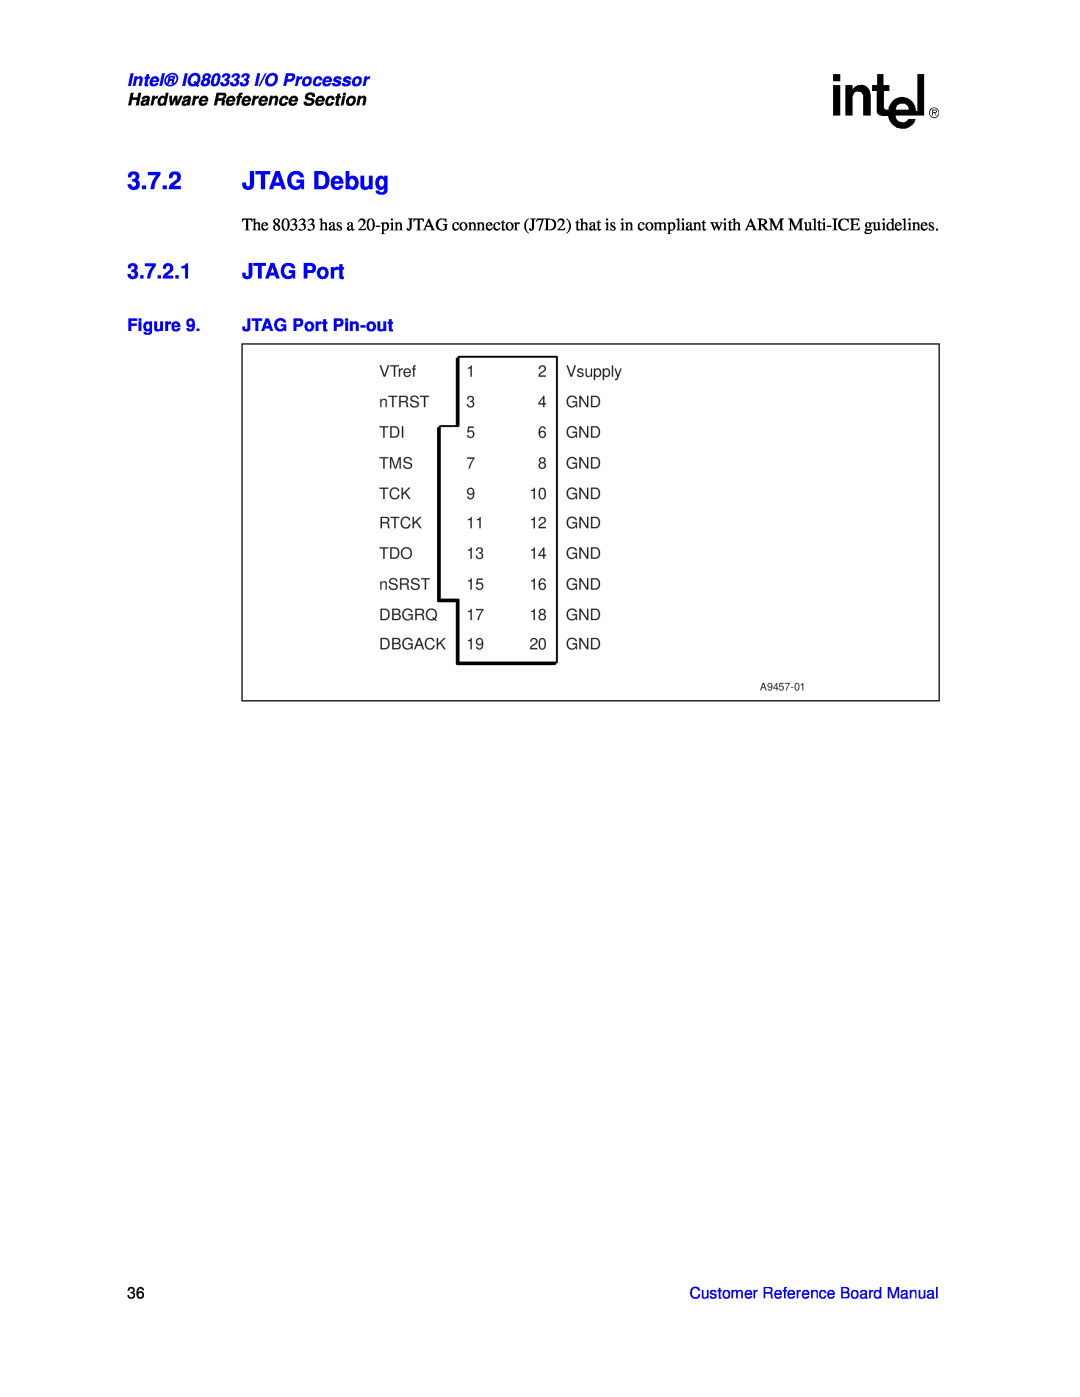 Intel 3.7.2JTAG Debug, 3.7.2.1JTAG Port, JTAG Port Pin-out, Intel IQ80333 I/O Processor, Hardware Reference Section 